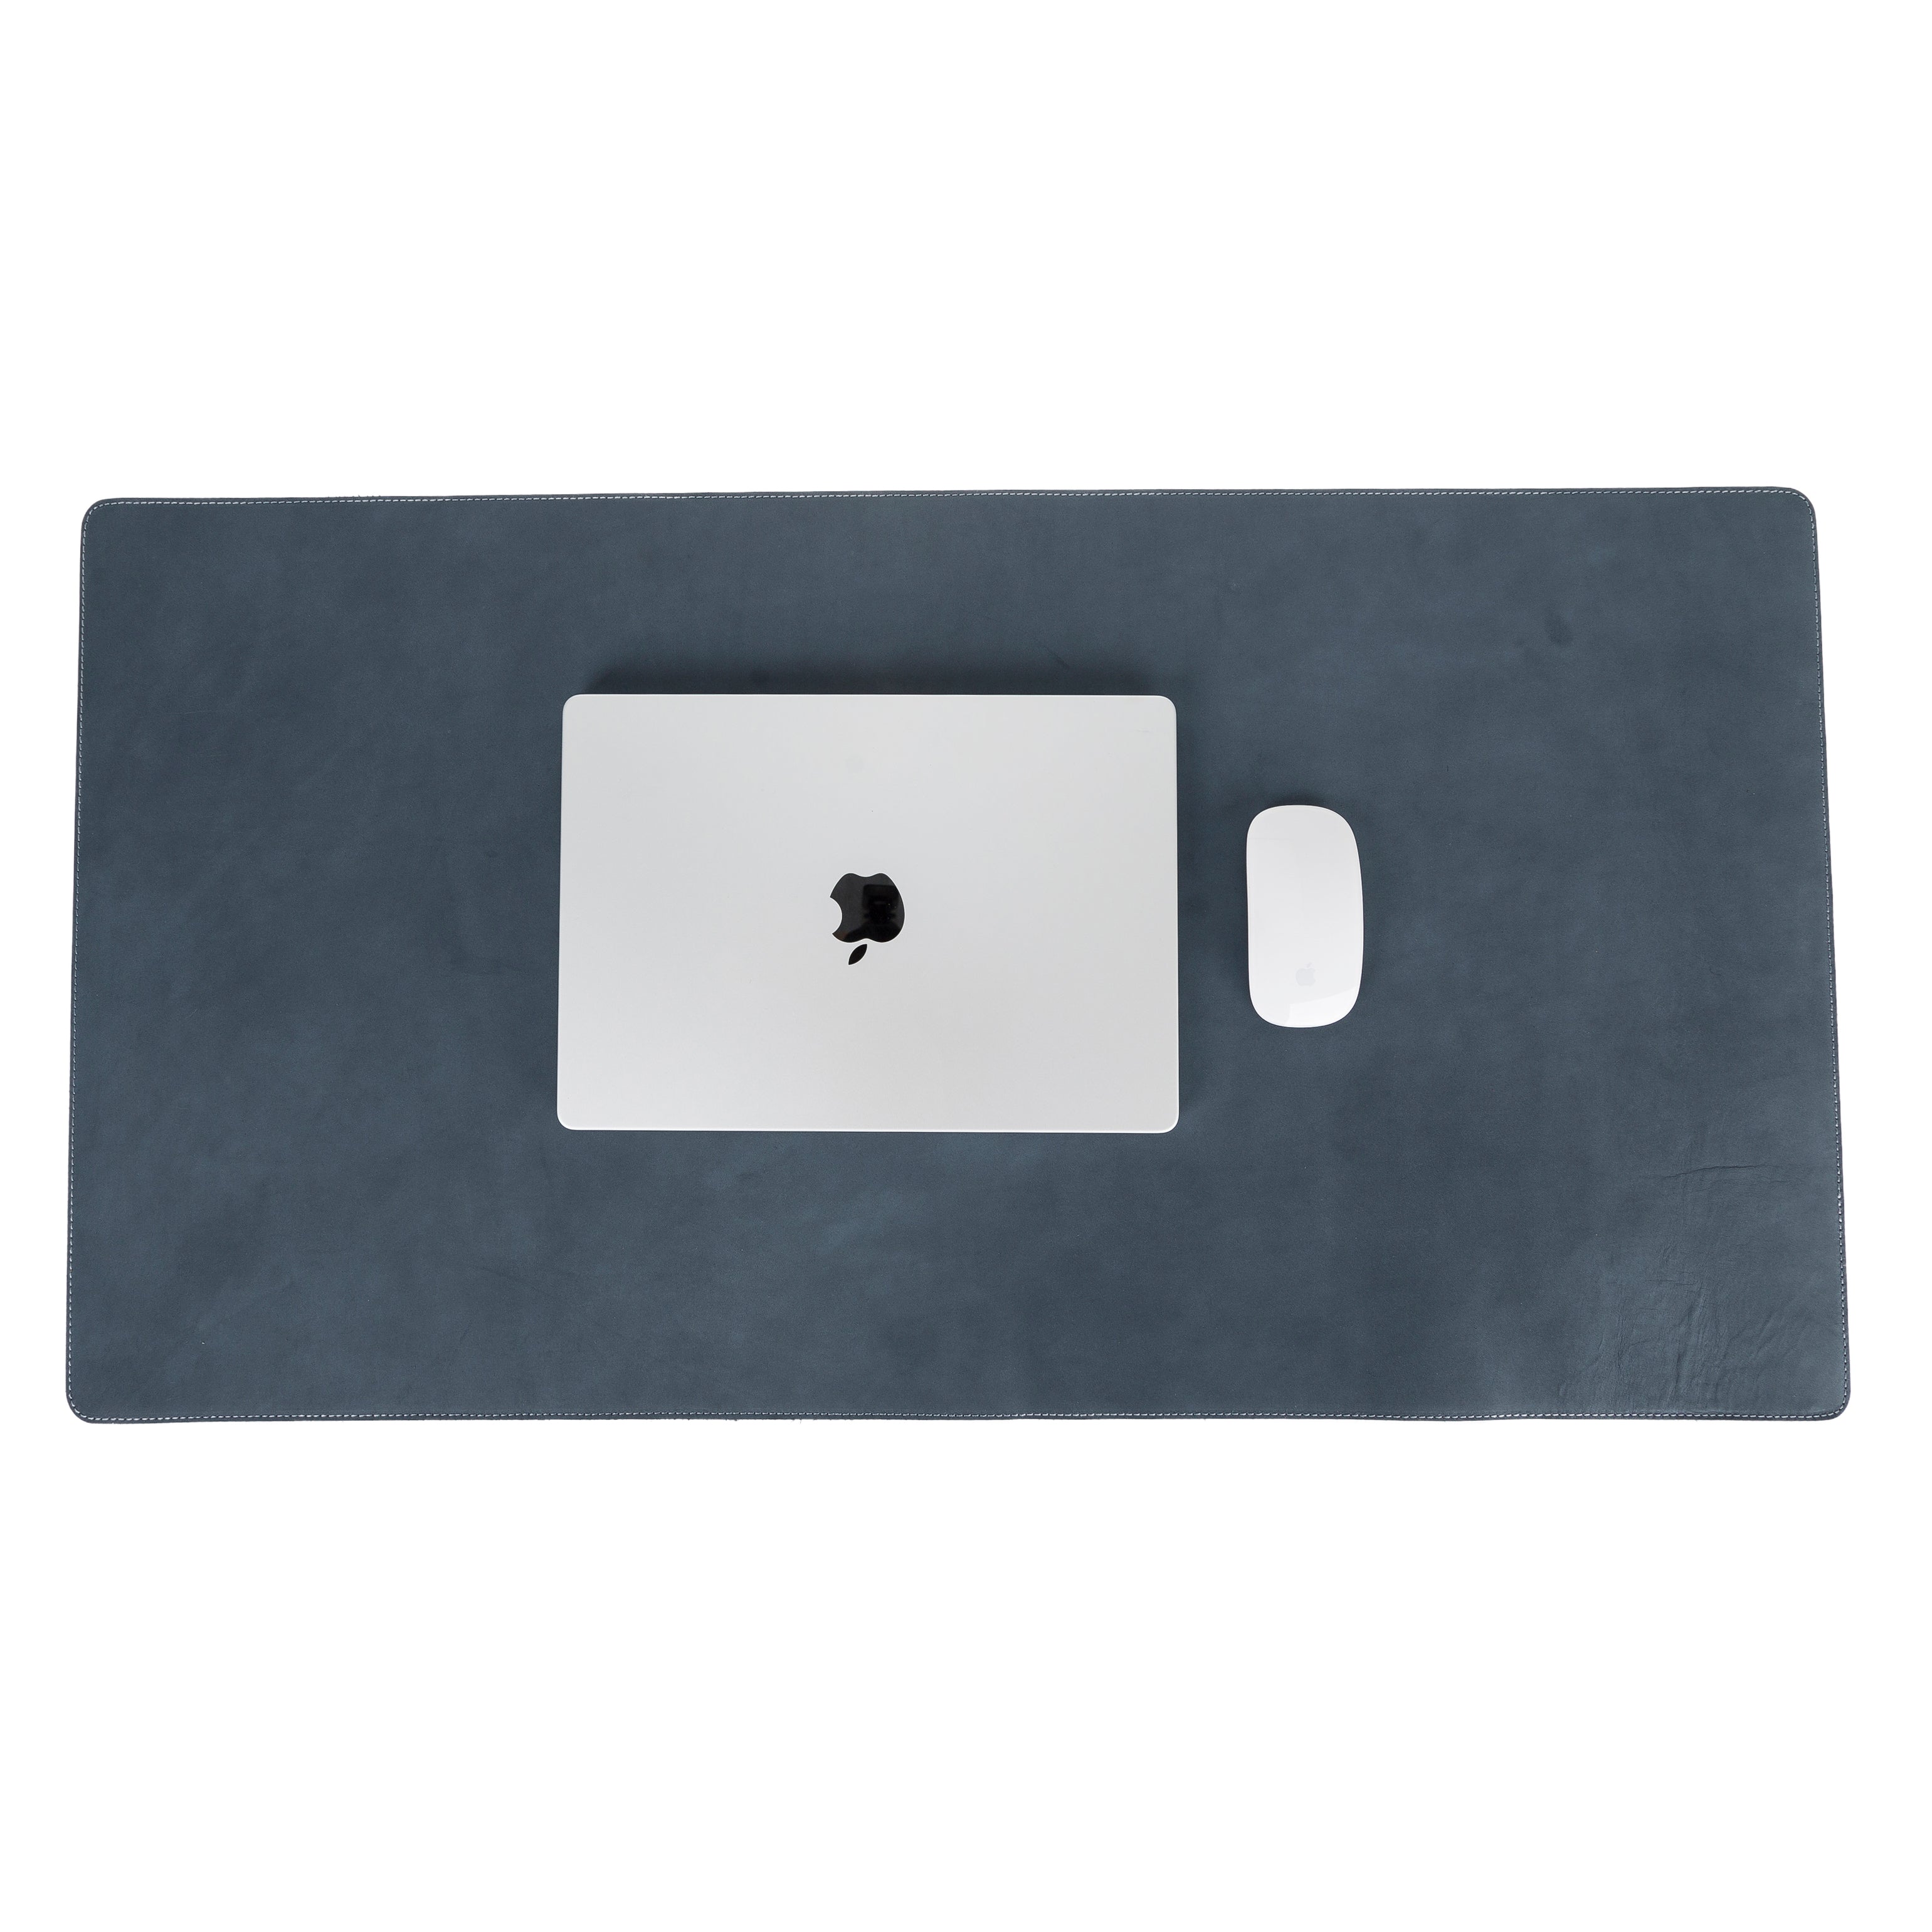 DelfiCase Genuine Blue Leather Deskmat, Computer Pad, Office Desk Pad 5